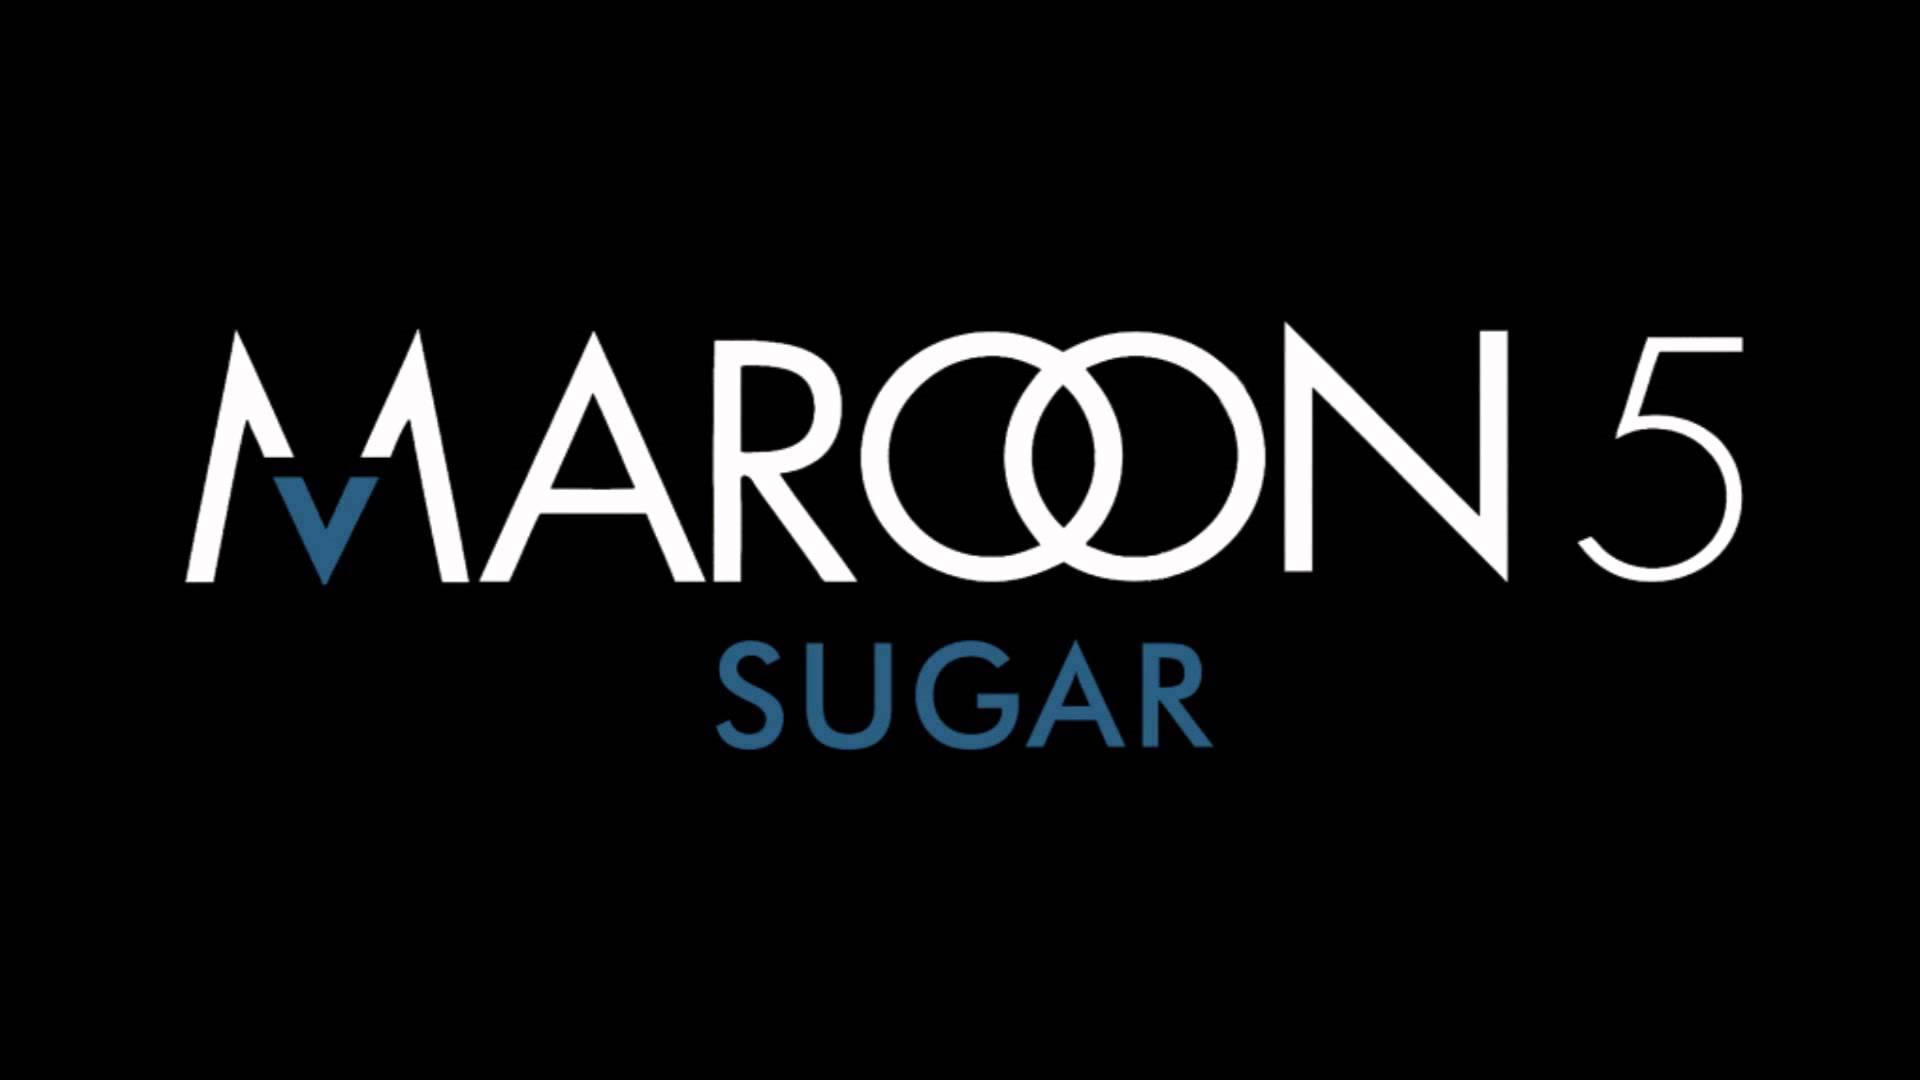 Maroon 5 Sugar Black Background